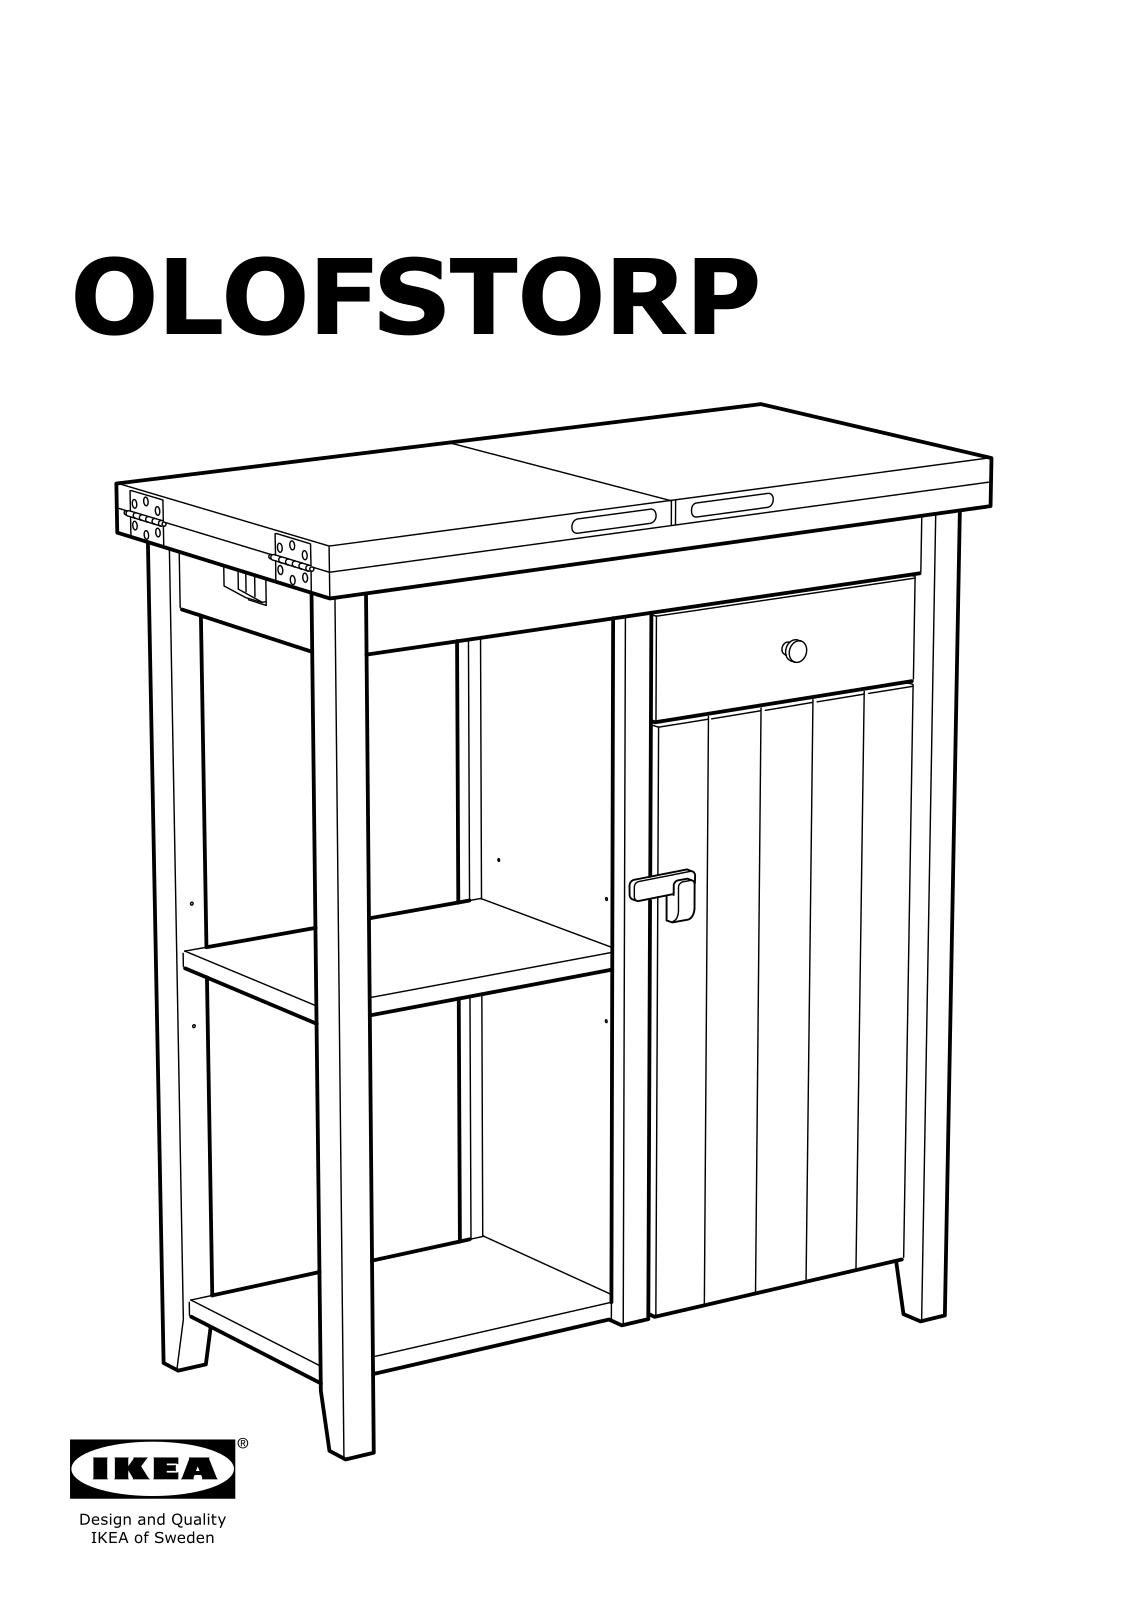 IKEA OLOFSTORP Storage unit User Manual